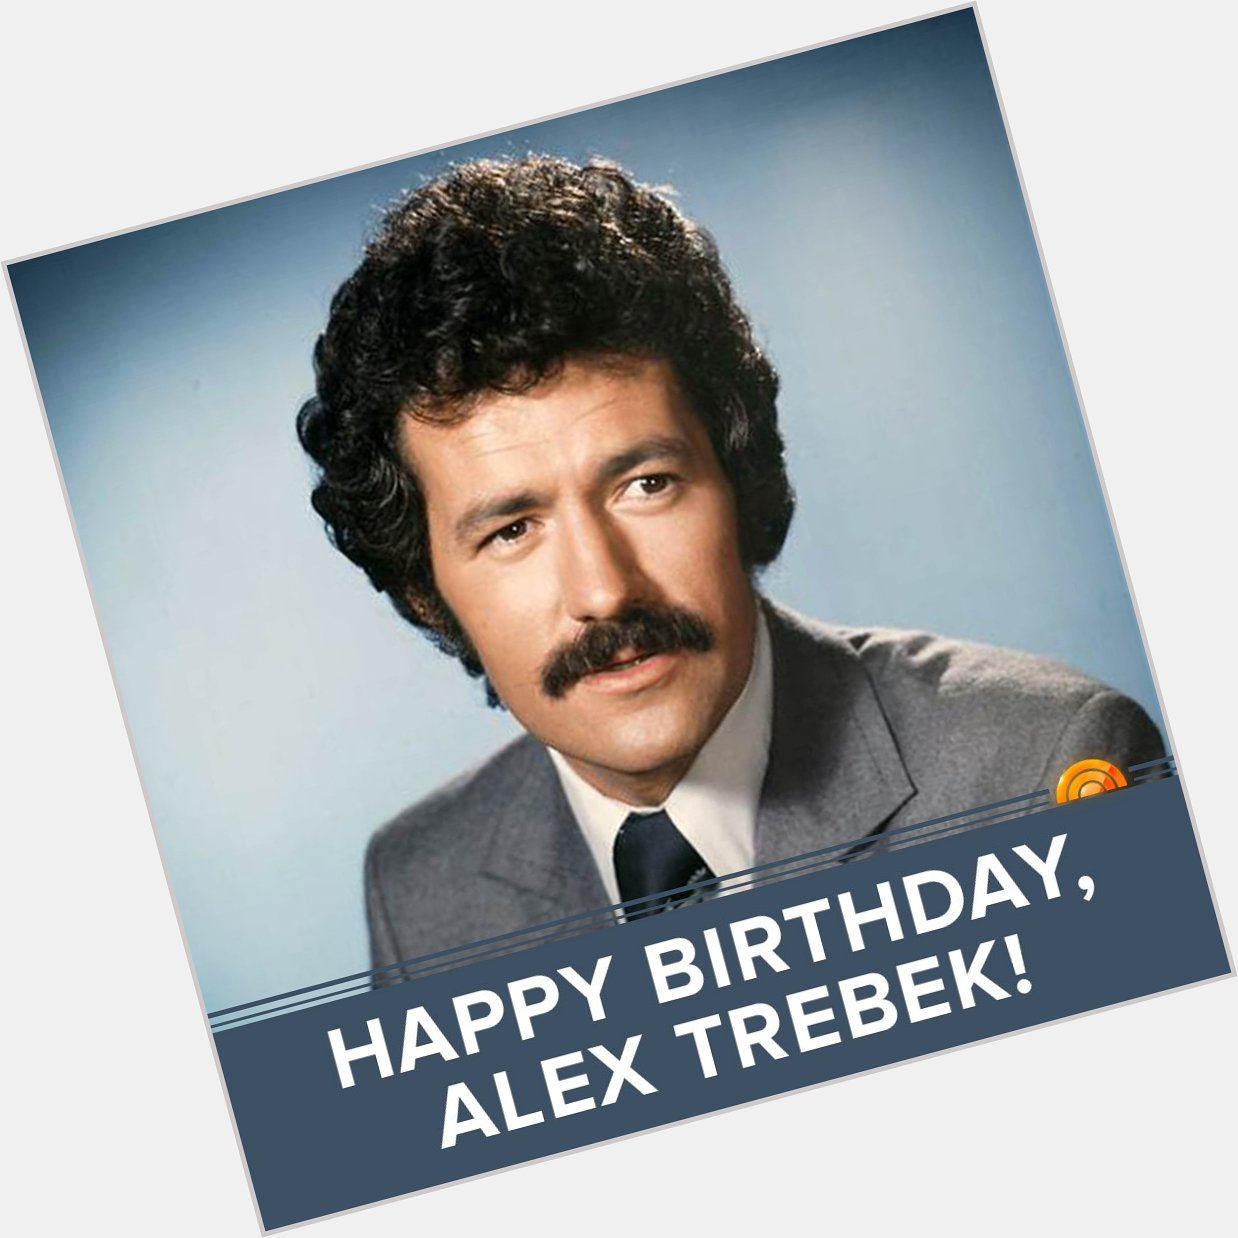 We ll take Happy birthday, Alex Trebek for $200!  